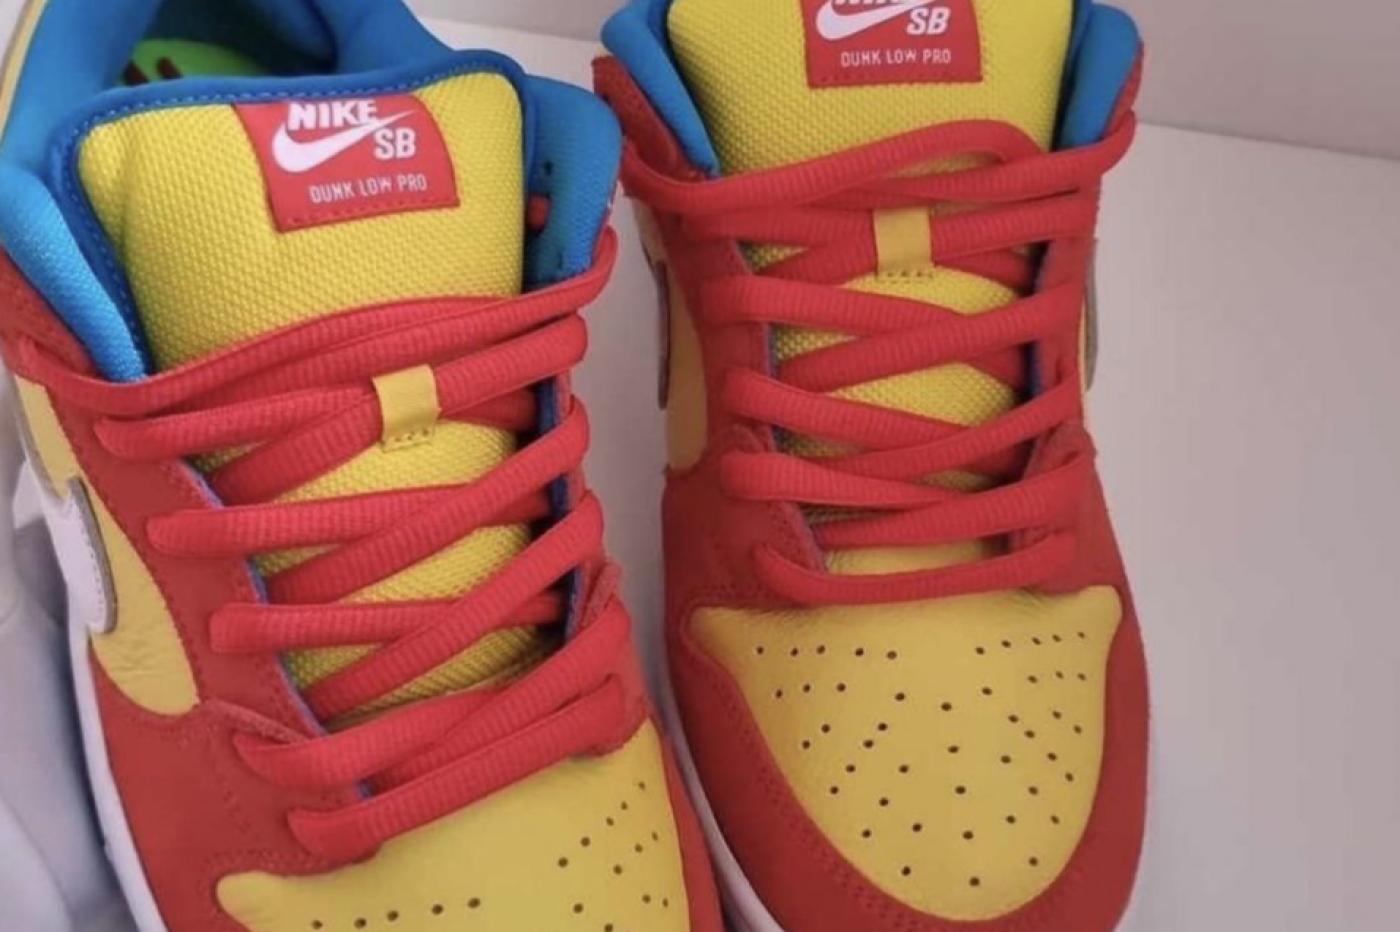 Nike Bart Simpons sneakers in front